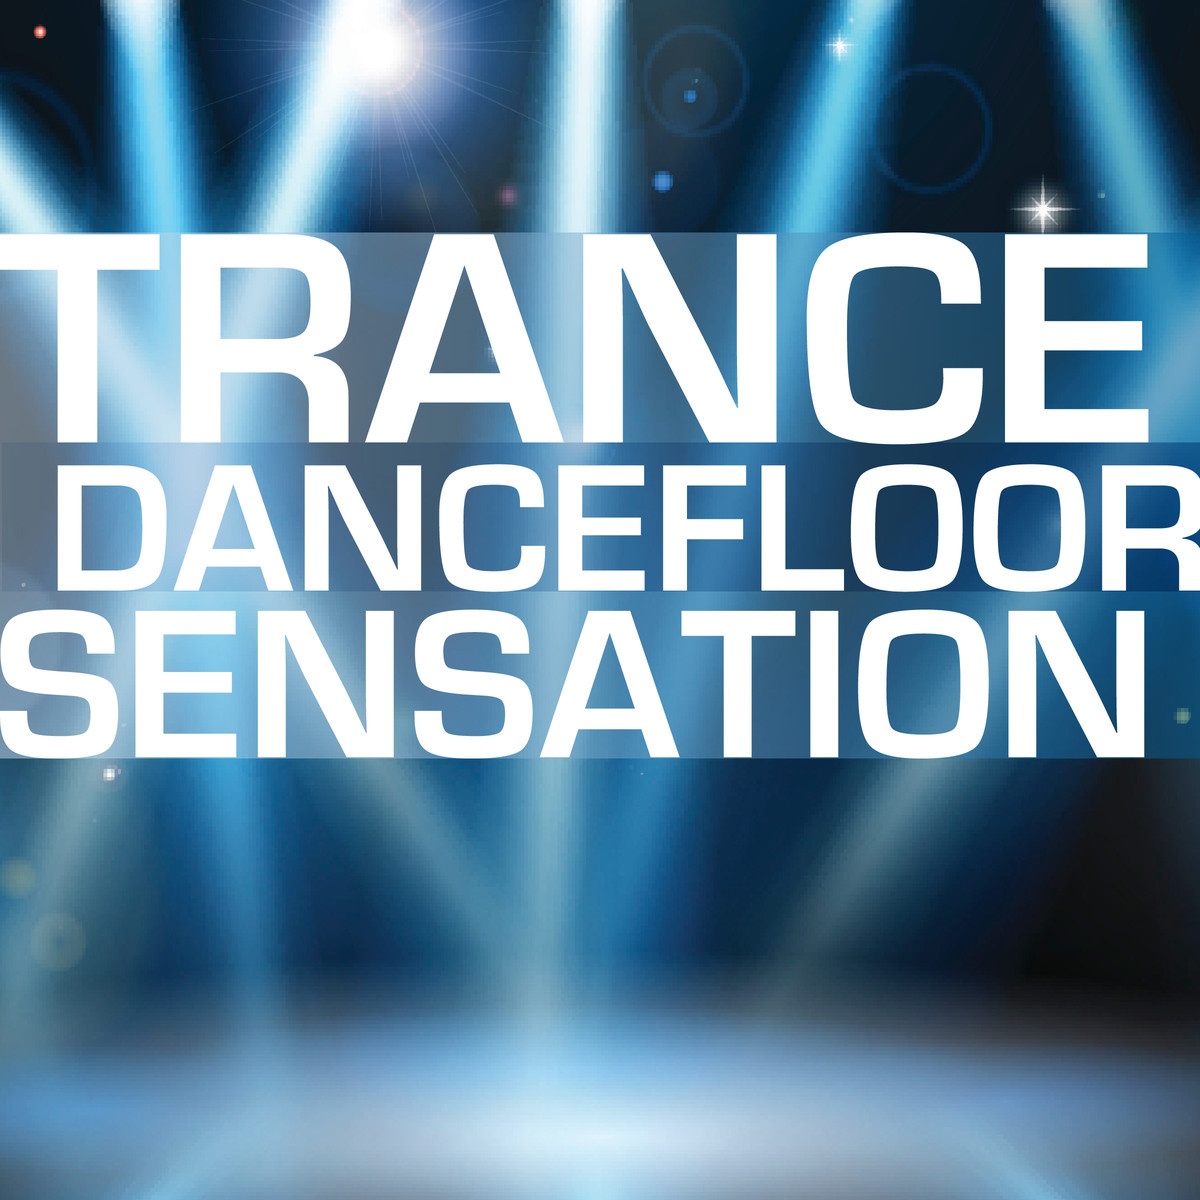 Trance Dancefloor Sensation